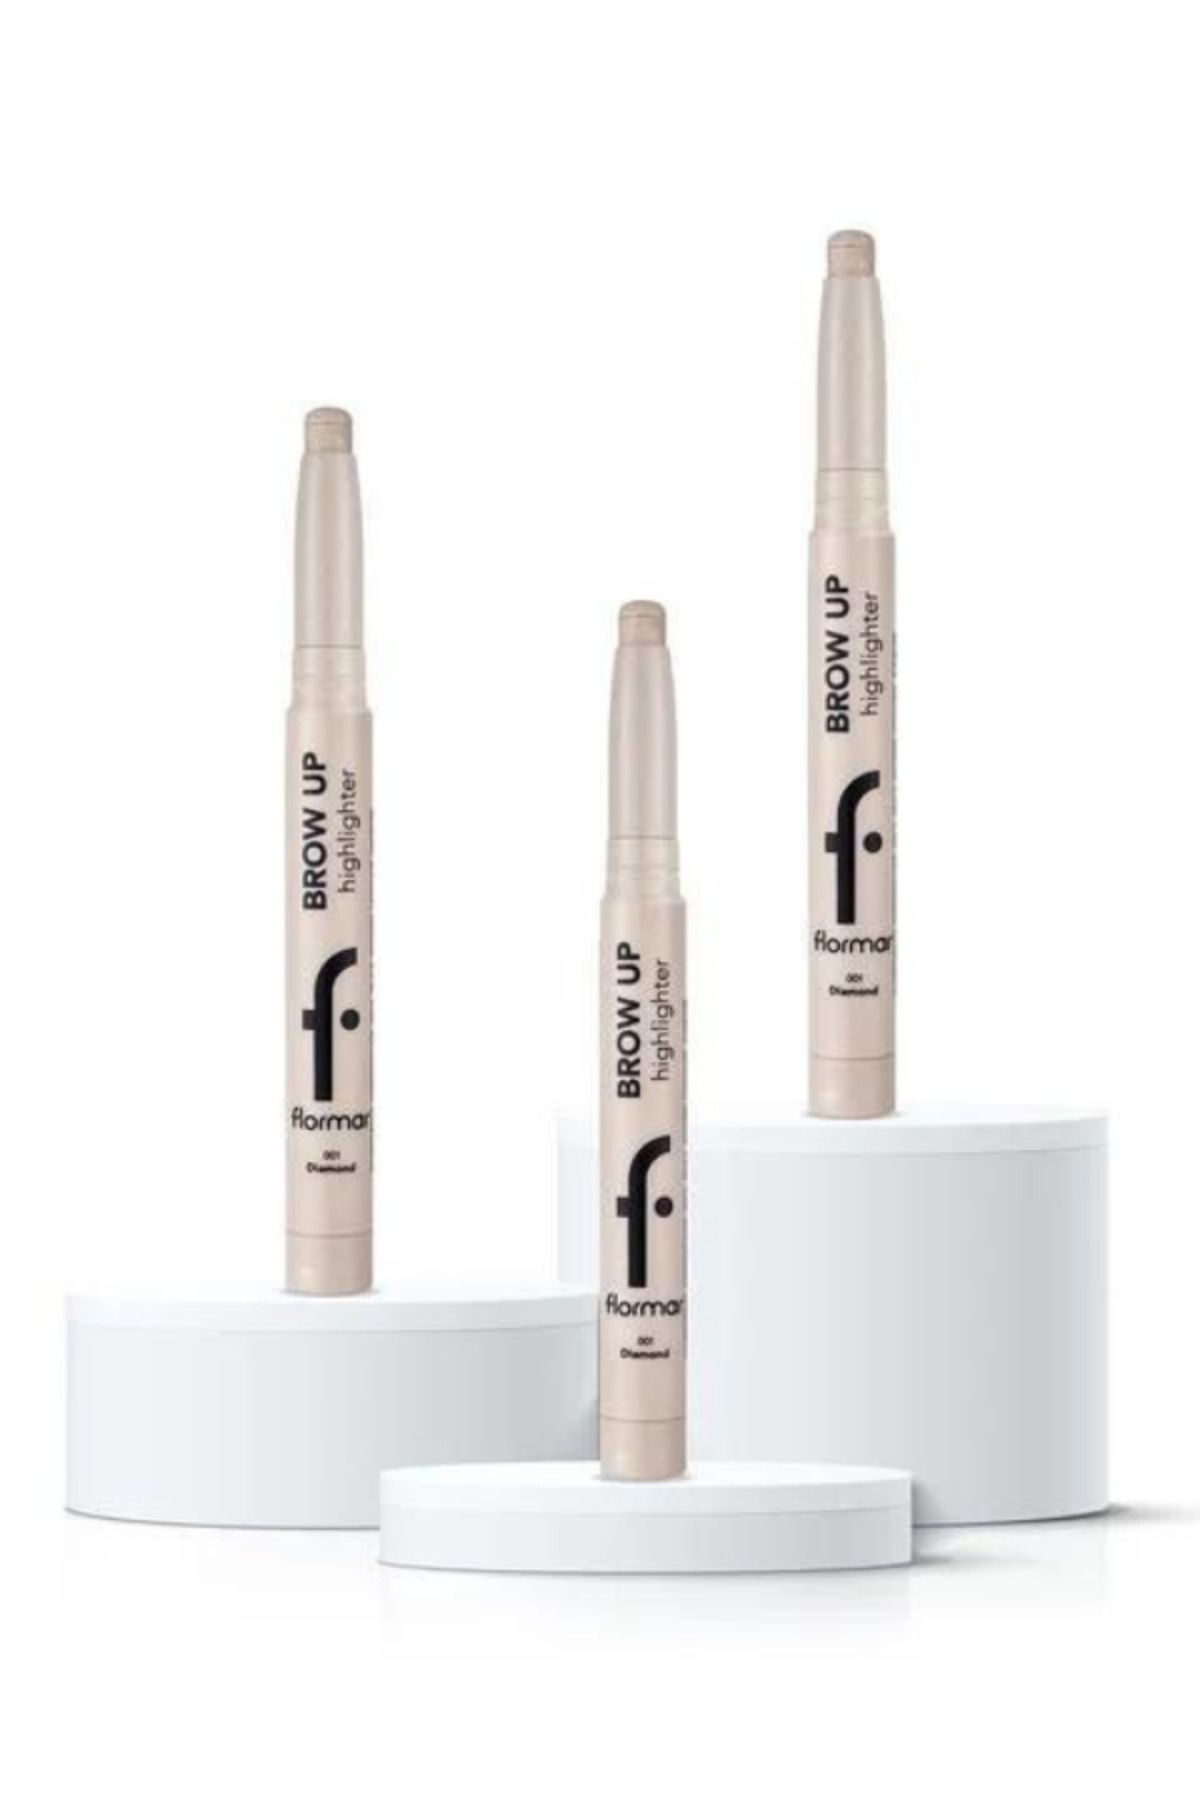 Flormar قلم روشن کننده ابرو Brow Up مجموعه ۳ عددی /011 مجموعه الماسی Highlight